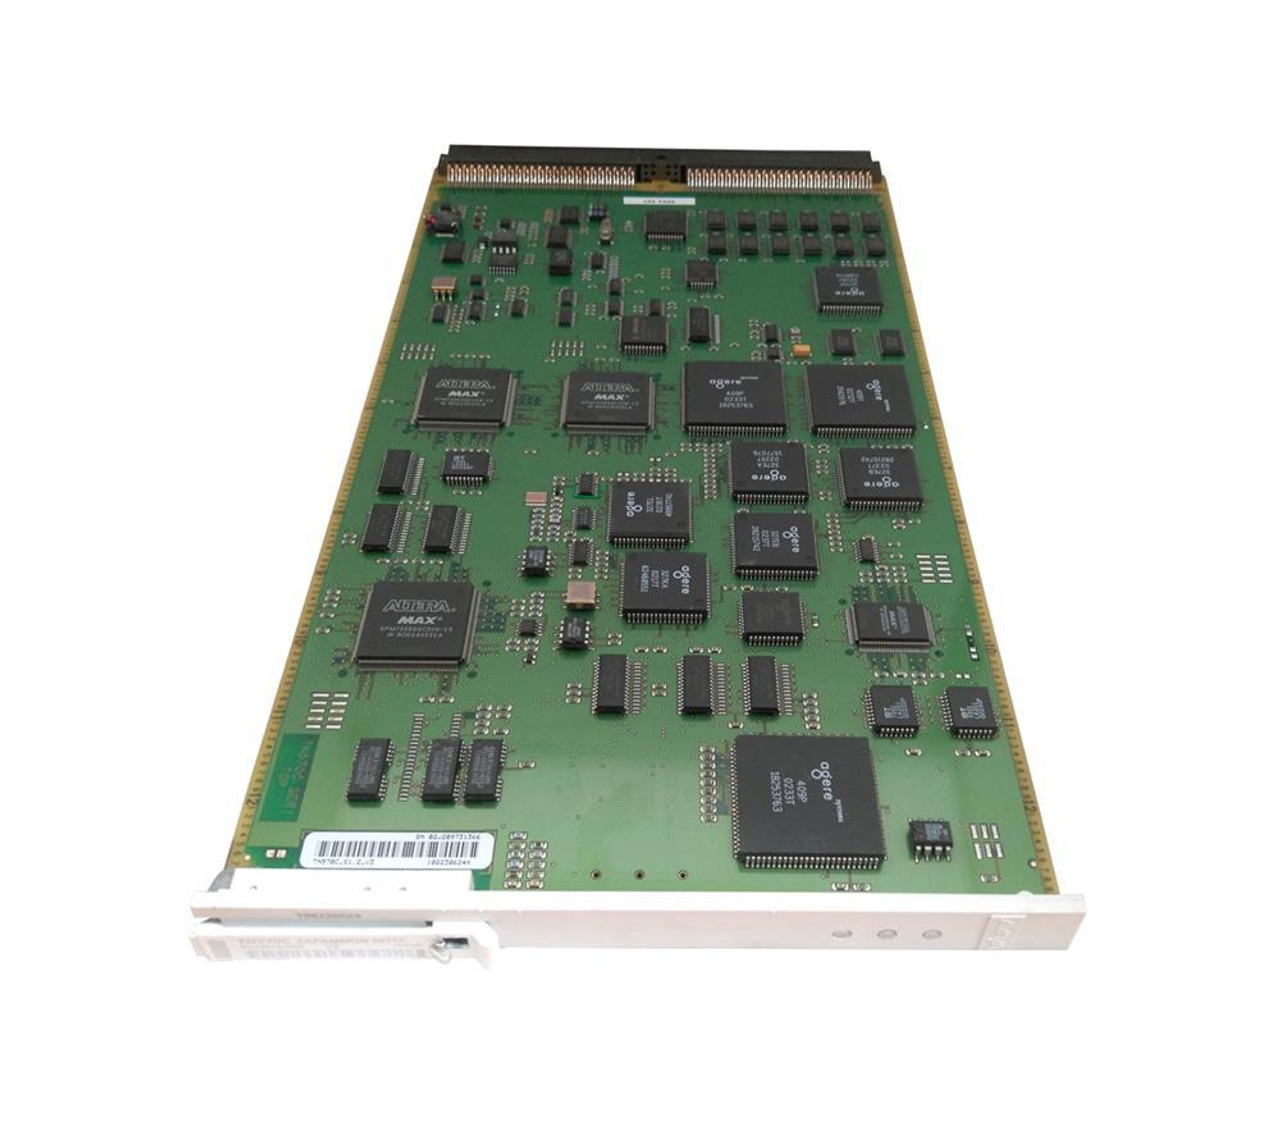 TN570C-X Avaya Tn570c Expansion Interface (Refurbished)